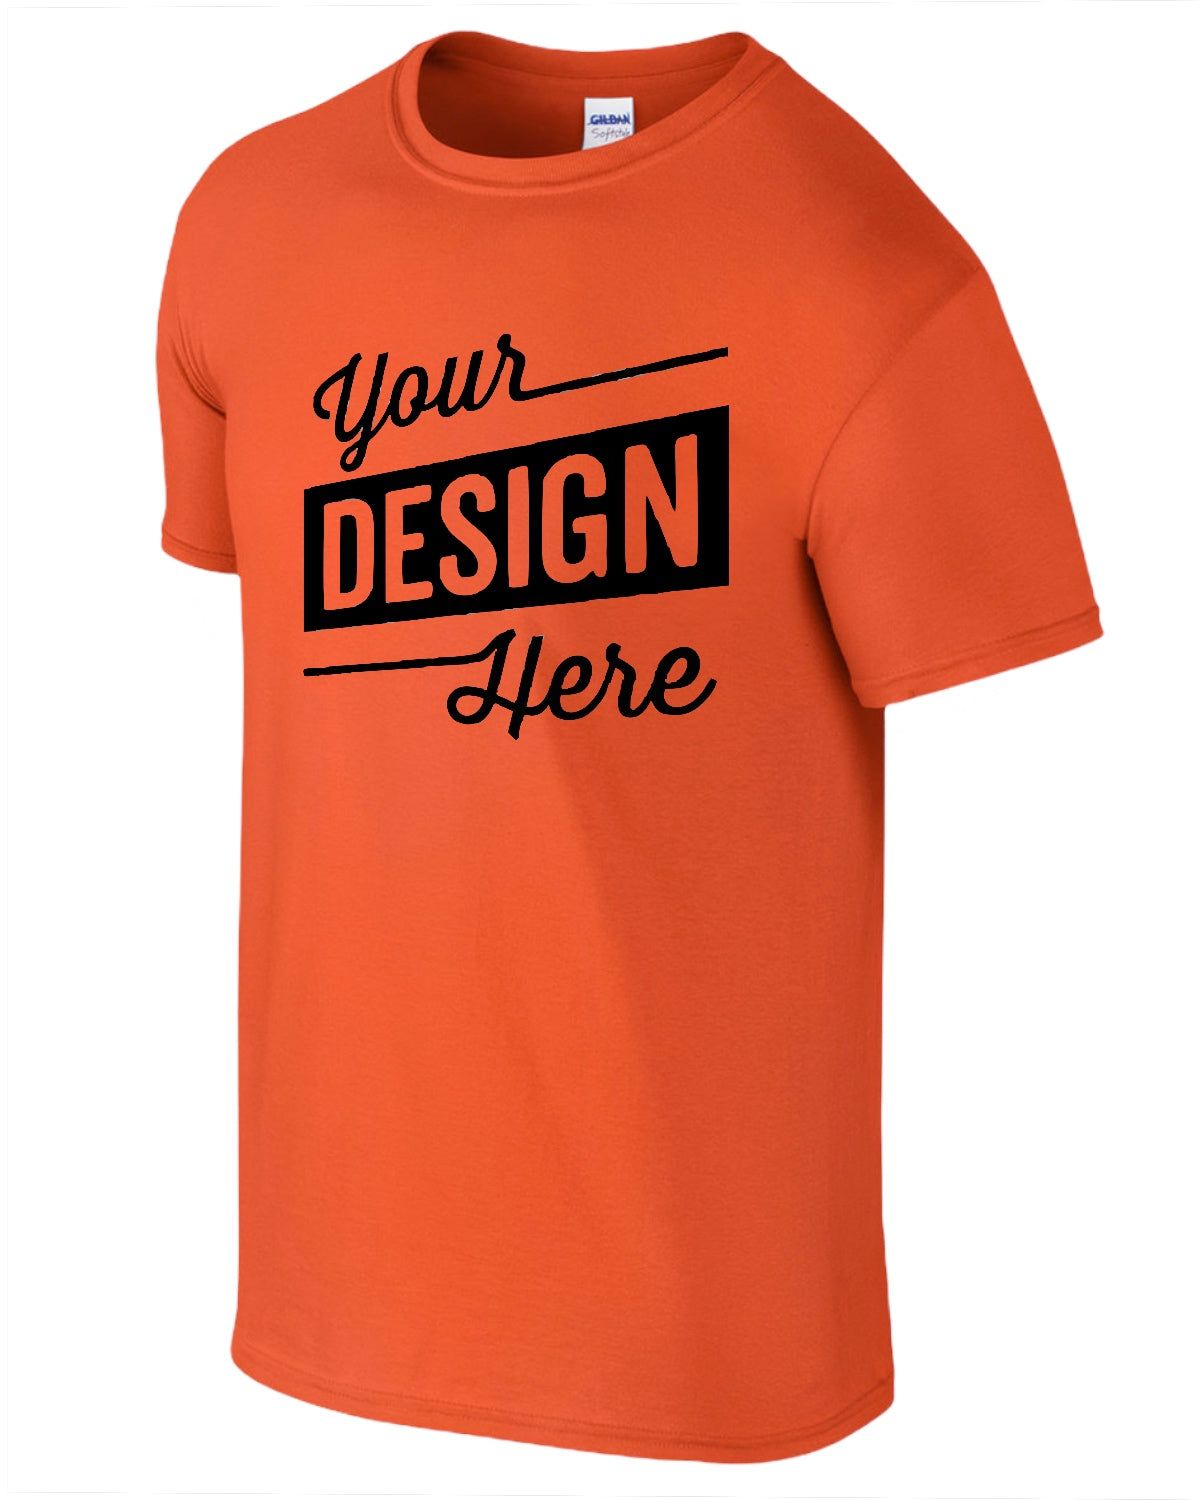 Embossed T-Shirts & T-Shirt Designs